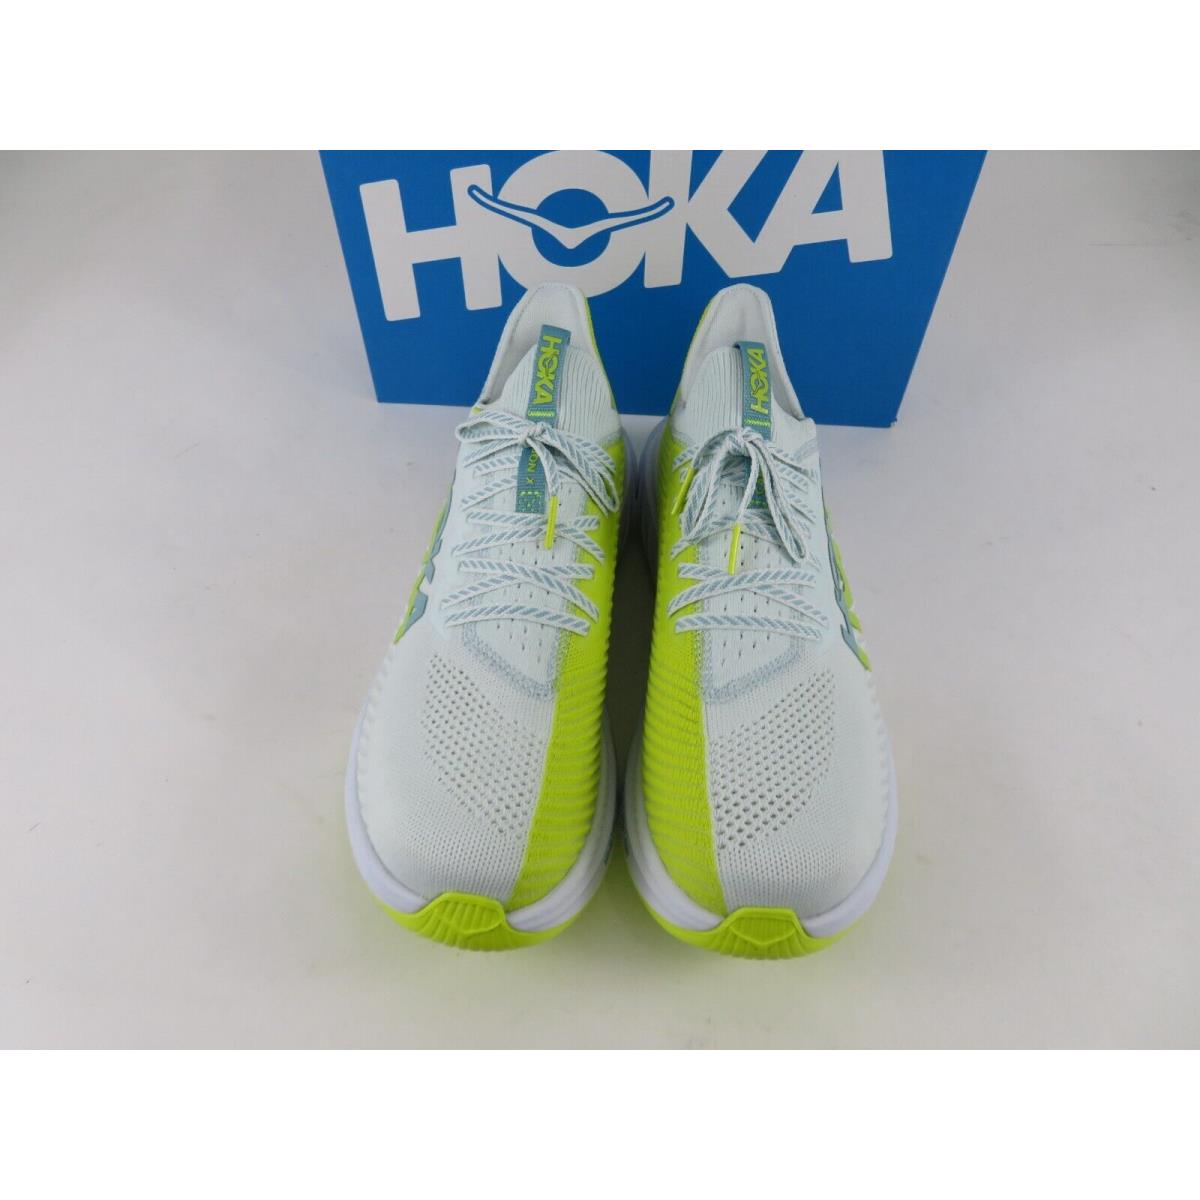 Hoka shoes  - Yellow 3